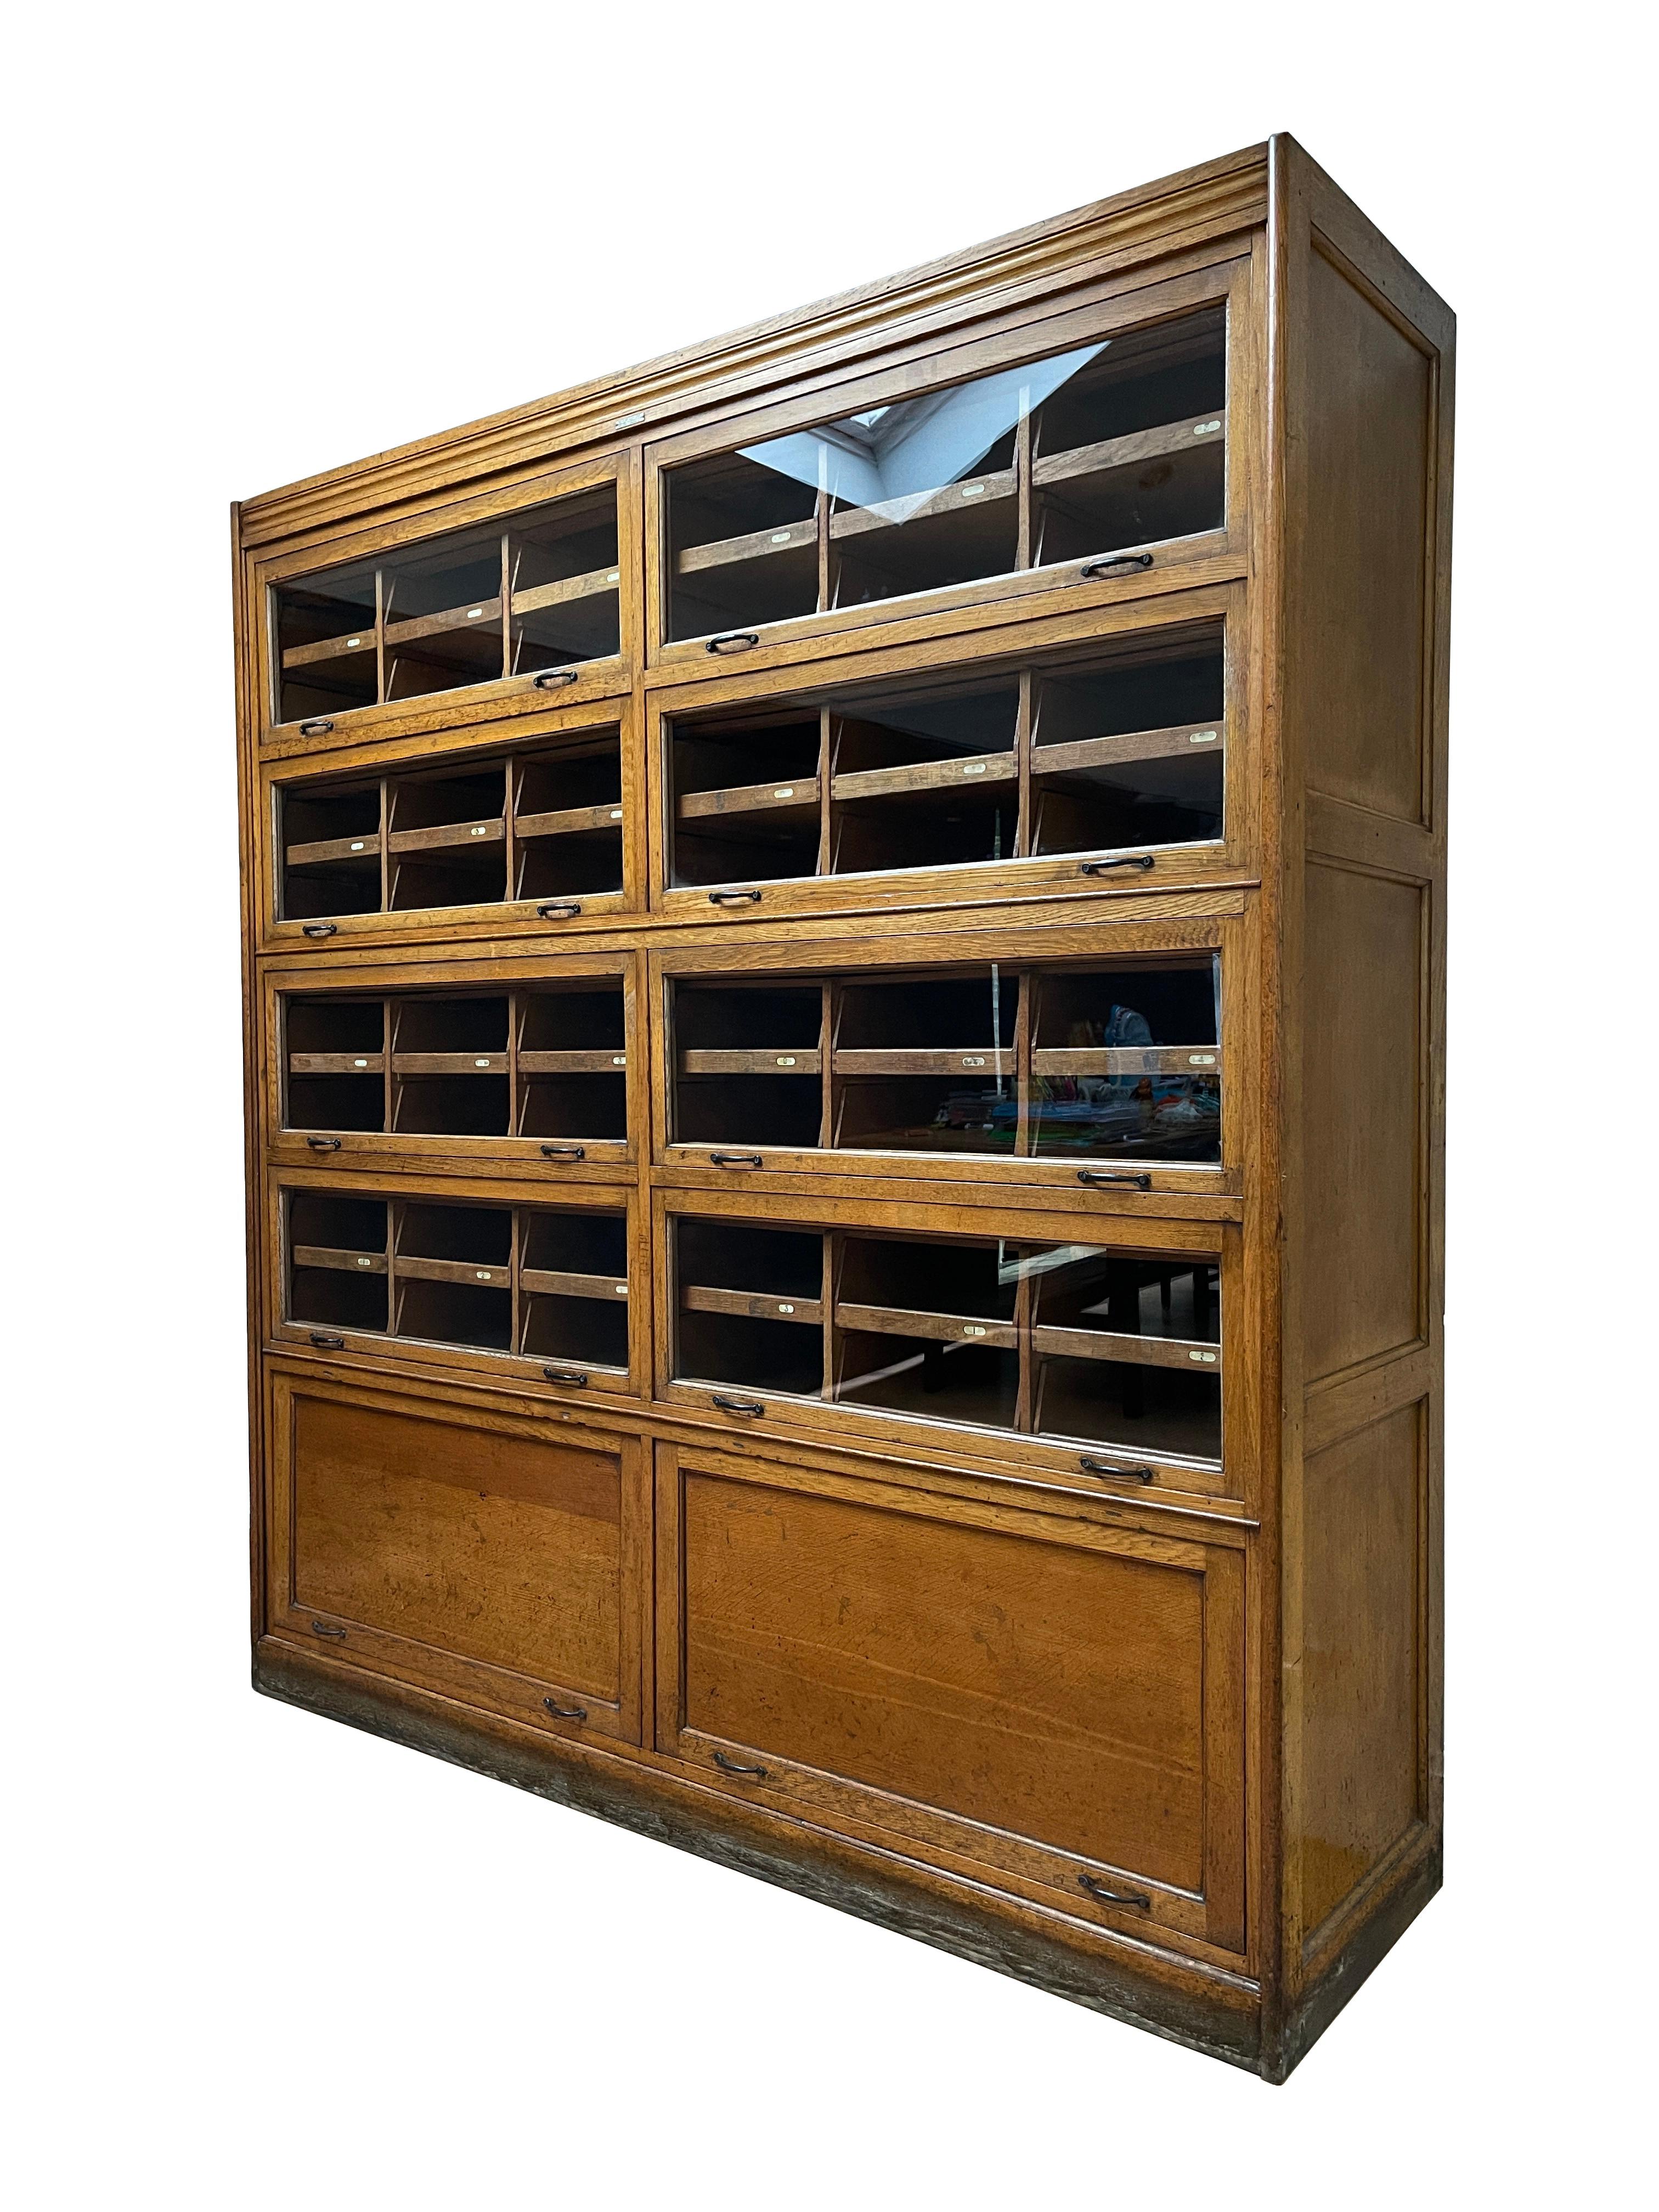 haberdashery display cabinet